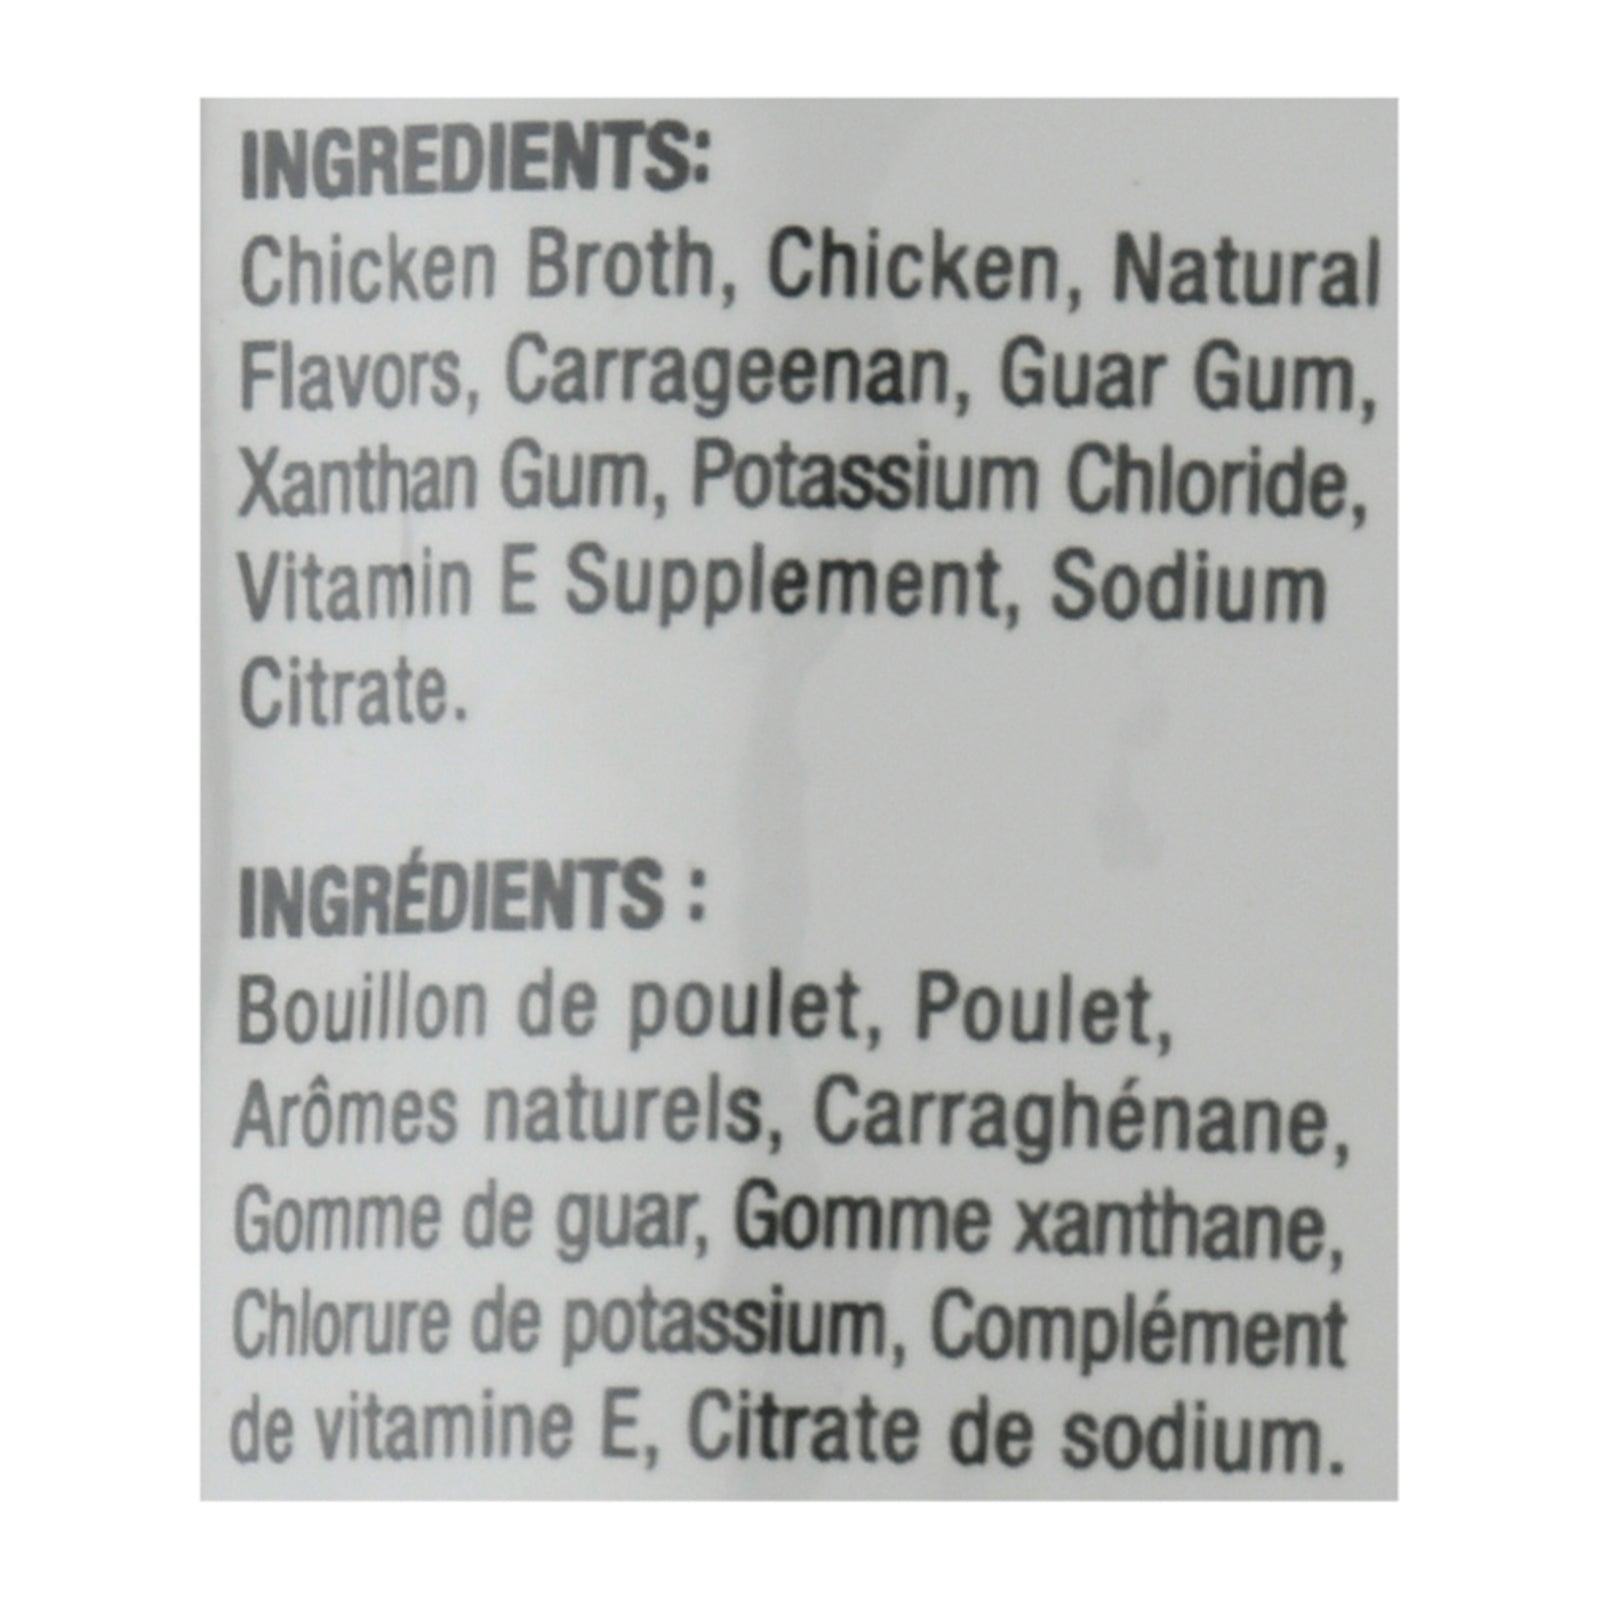 Inaba - Cat Food Chicken Broth Twin - Case Of 8-2.8 Oz - Loomini